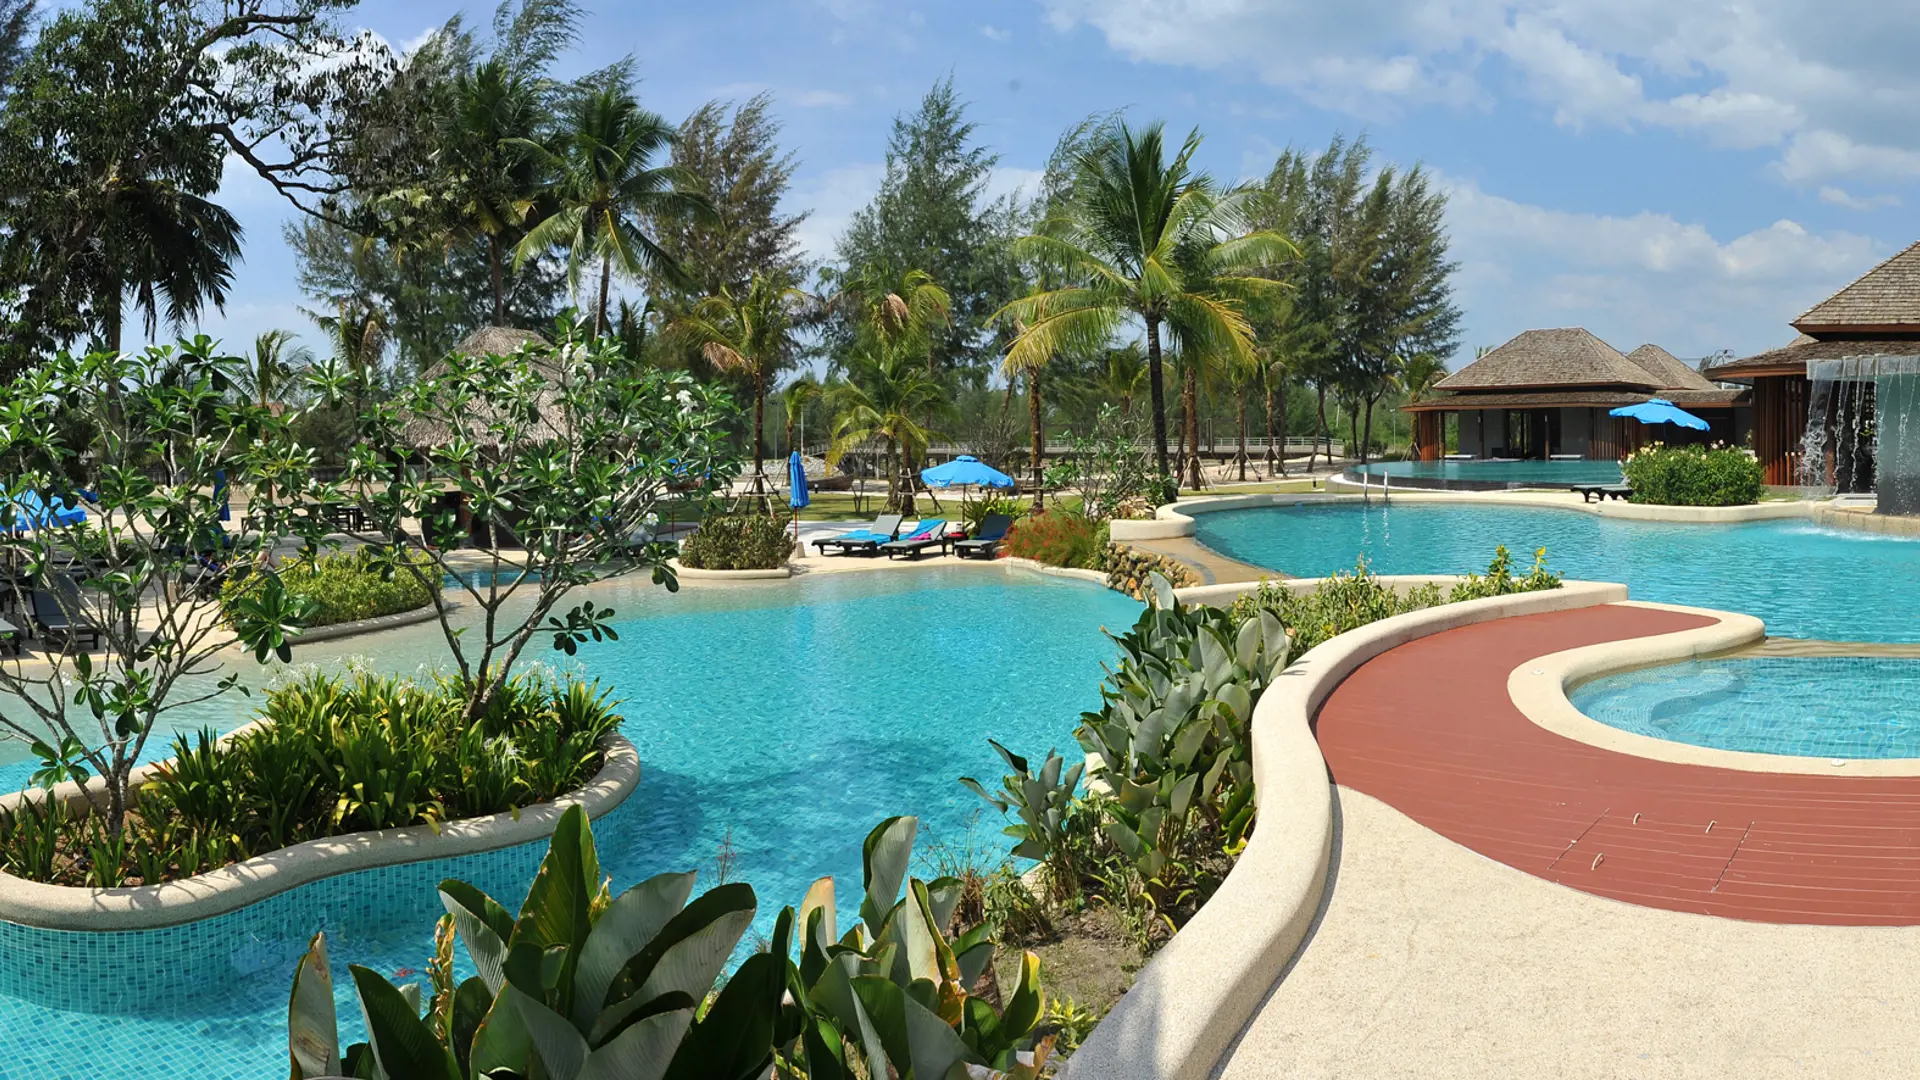 FLERE SWIMMINGPOOLS - Apsara Beachfront Resort har flere skønne swimmingpools. Den ene ligger med udsigt til havet, Check Point Travel